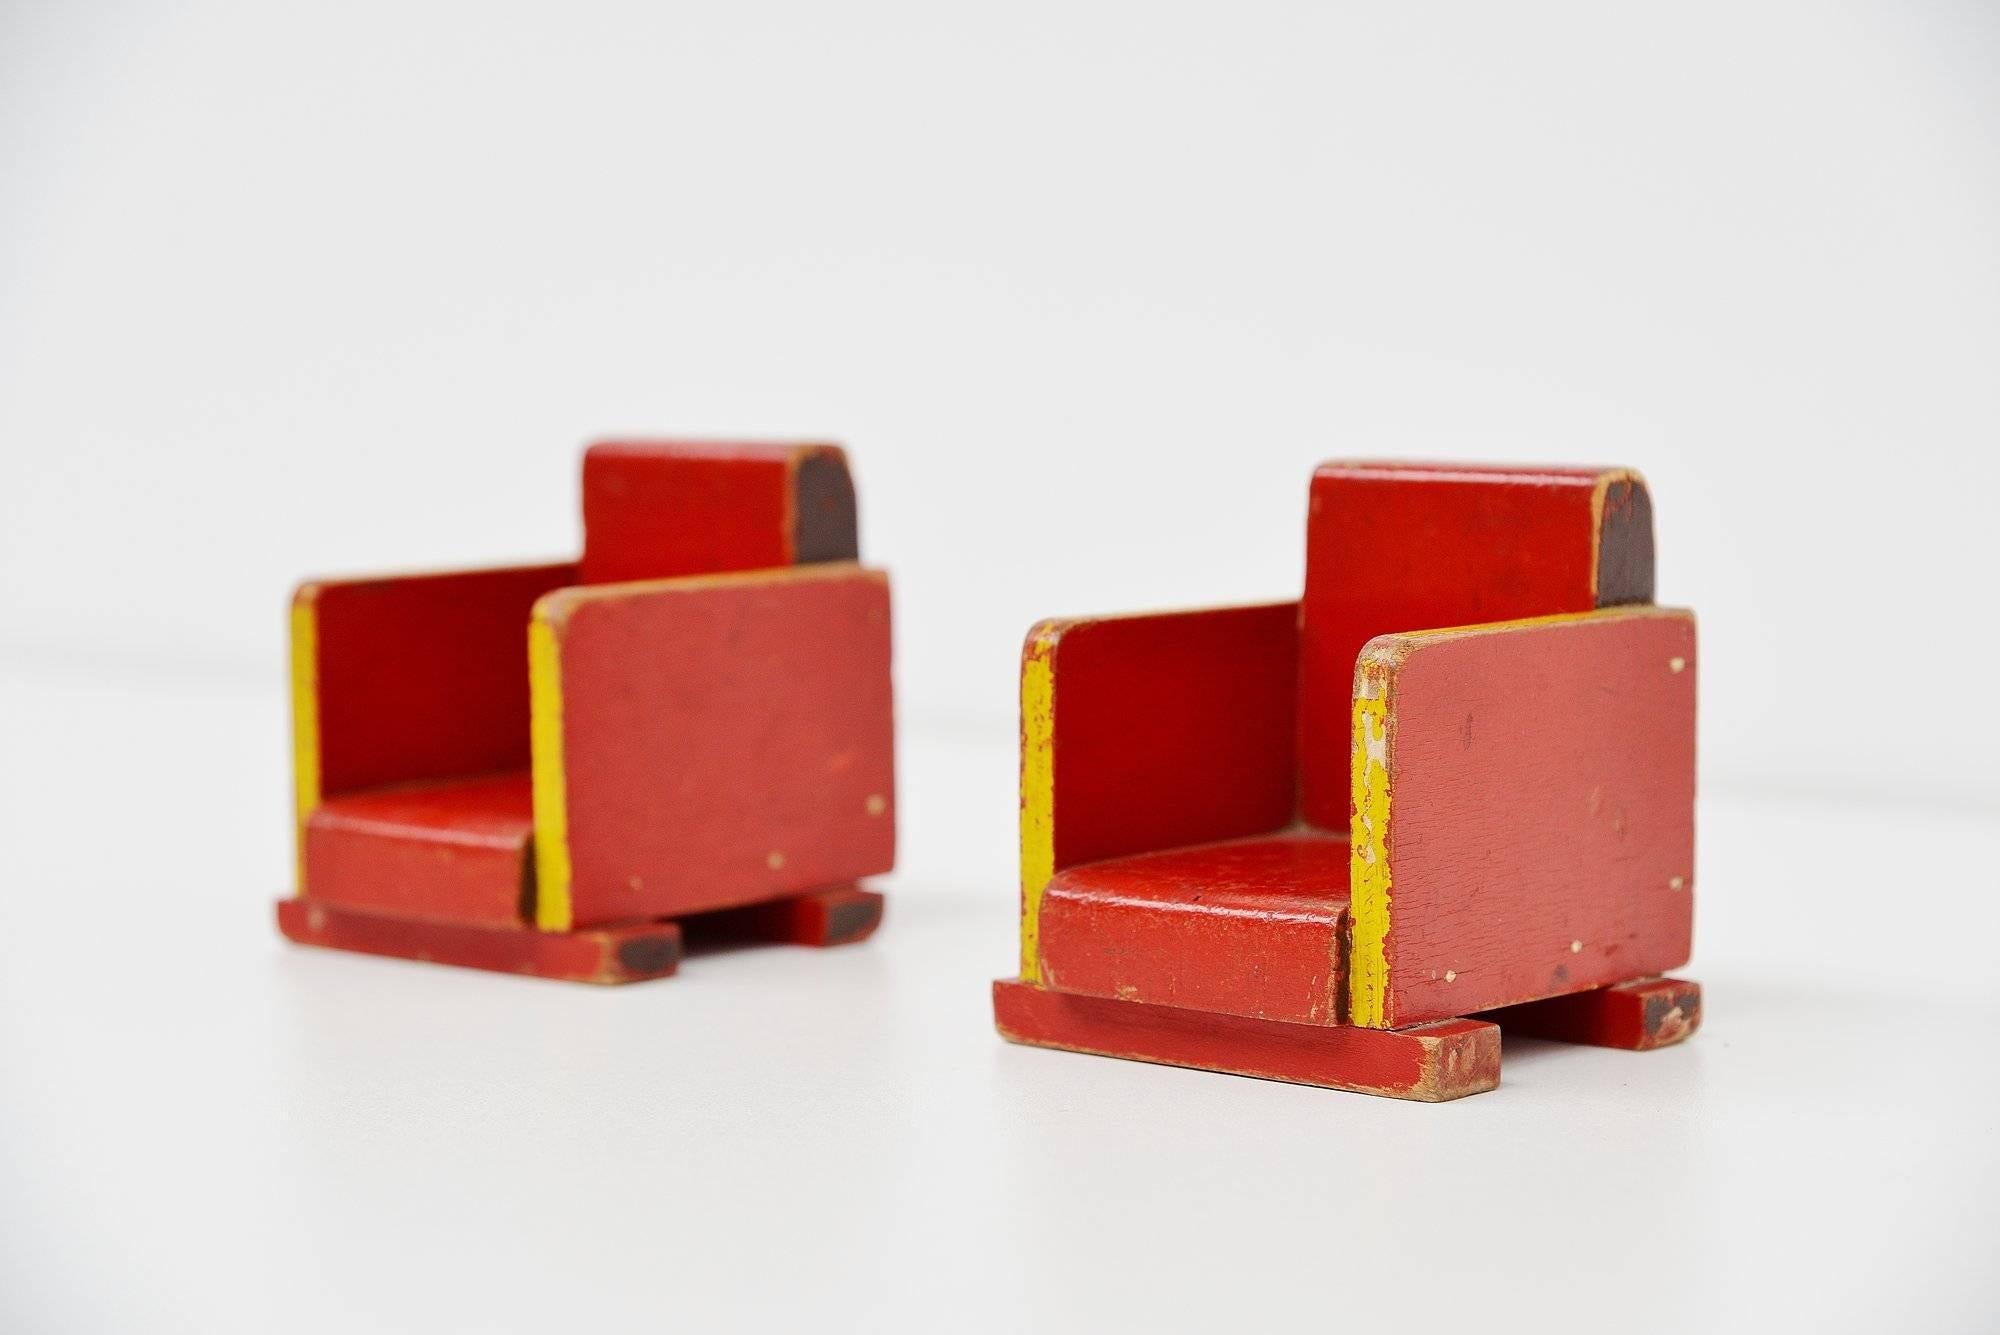 Hand-Painted Ado toy chairs Ko Verzuu, Holland 1939